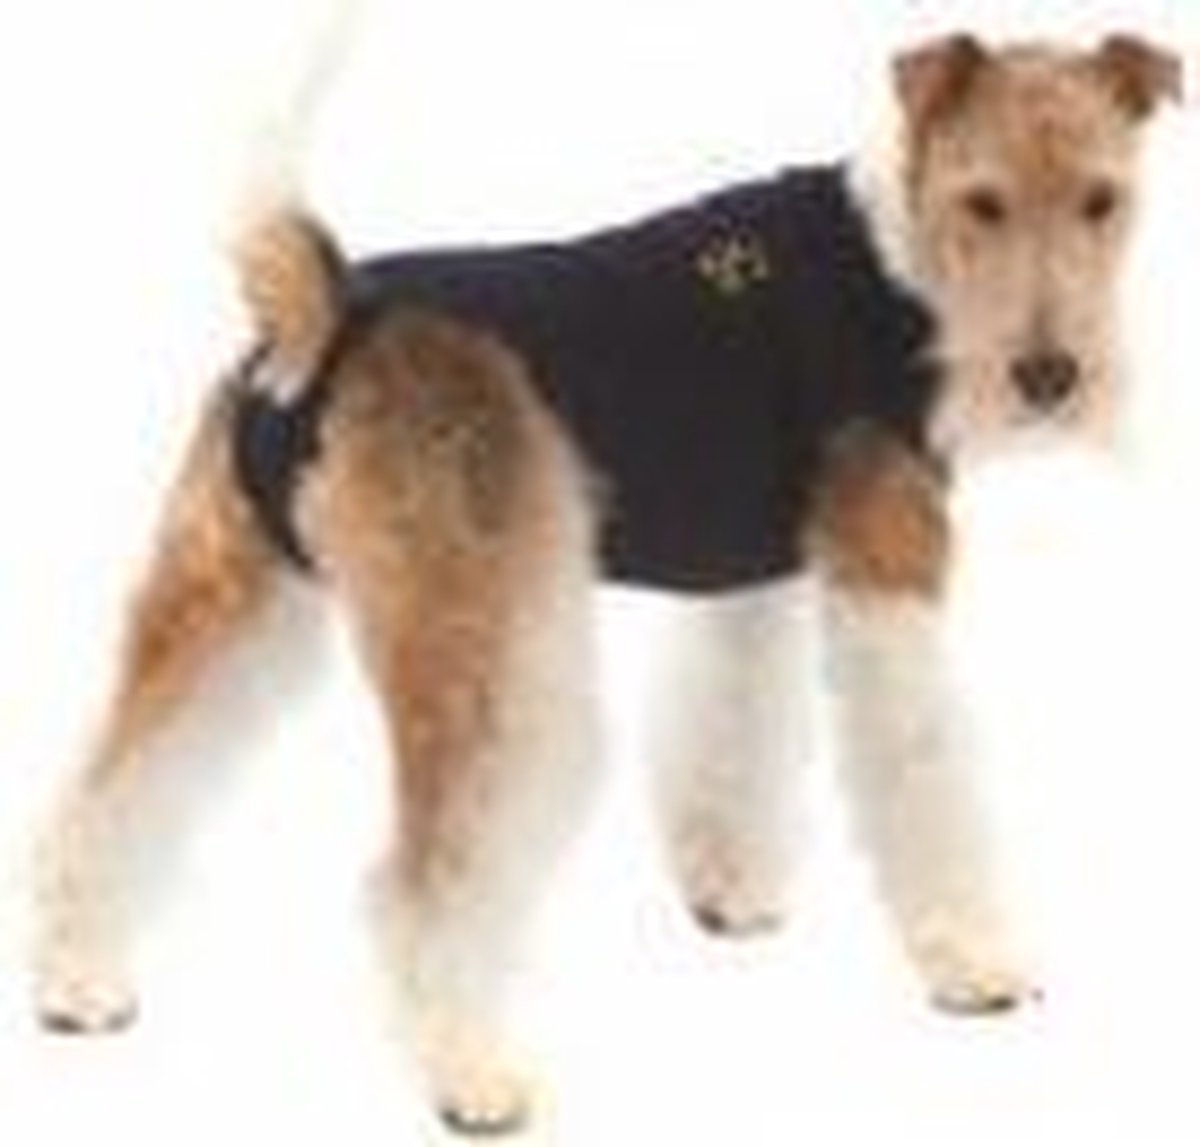 Medical Pet Shirt Hond - Blauw XS - Medical Pet Shirt